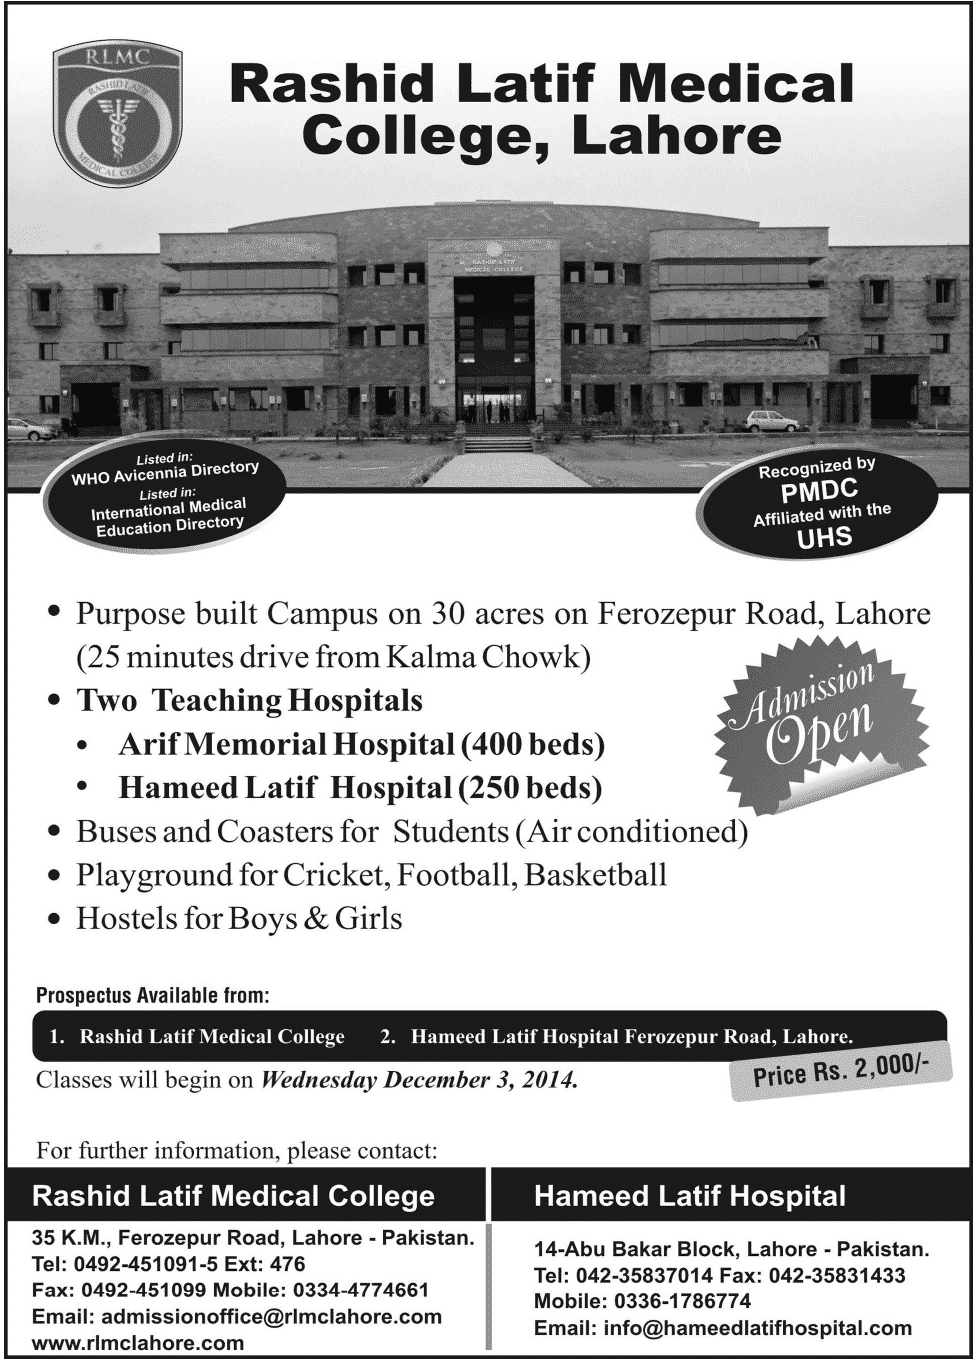 Rashid Latif Medical College Mbbs Admission 2014-2015 Form Online